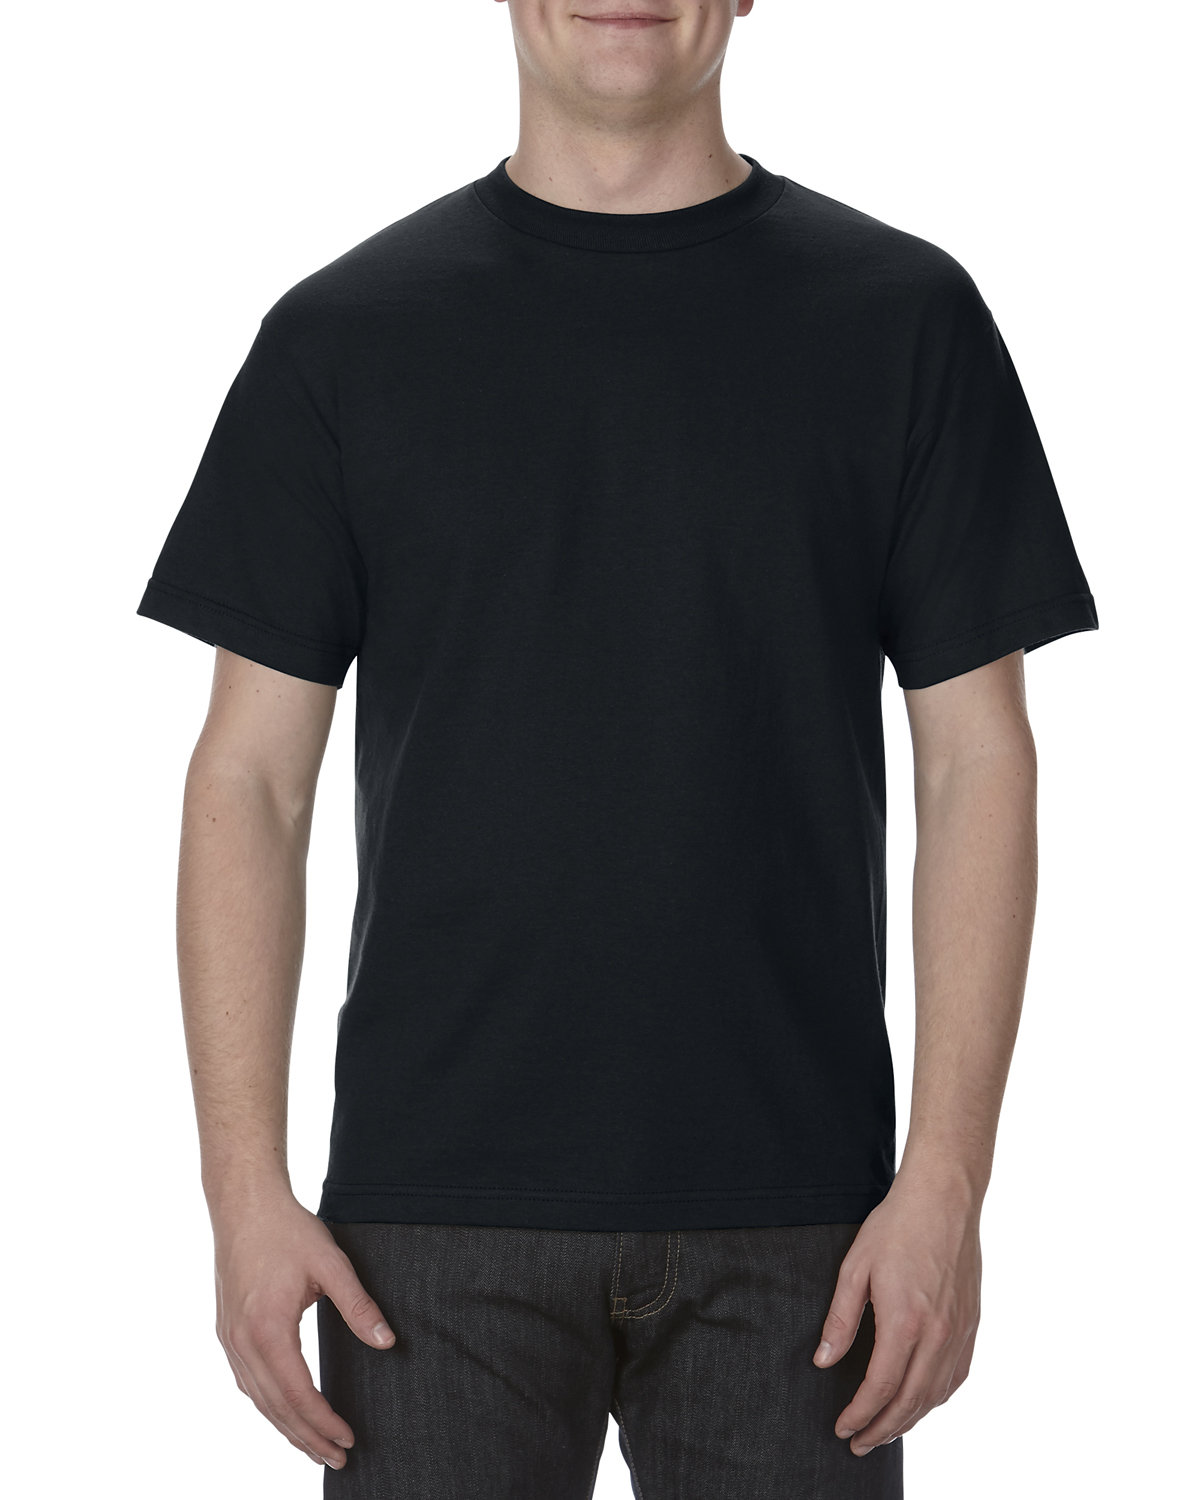 American Apparel Adult 6.0 oz., 100% Cotton T-Shirt BLACK 